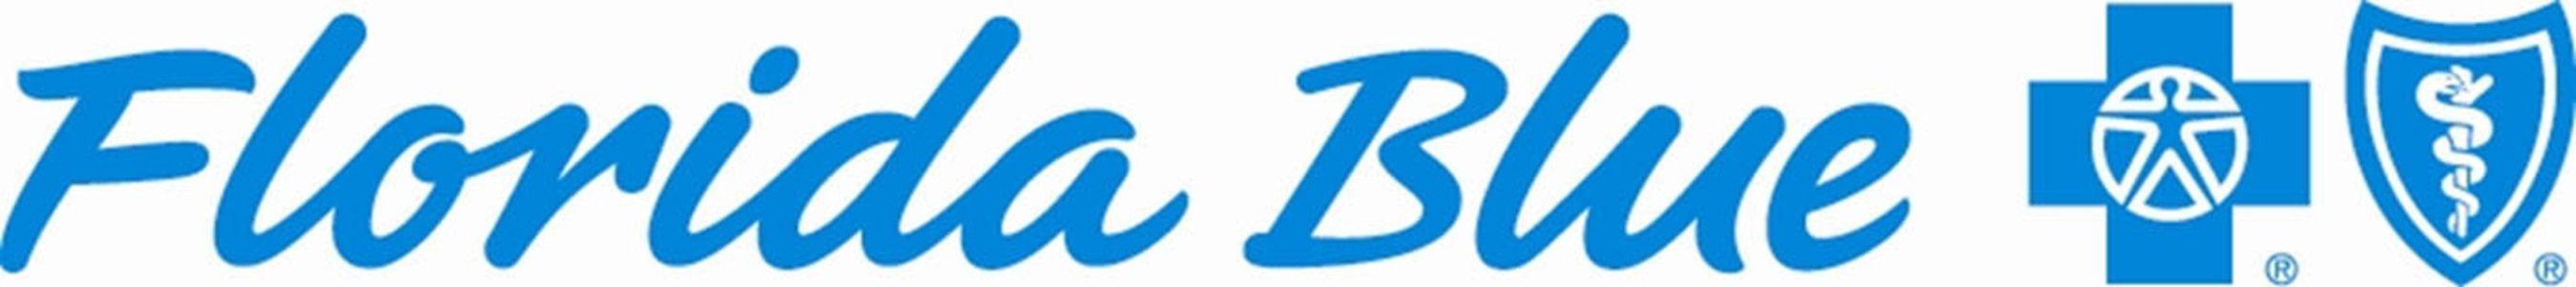 Florida Blue Logo - Florida Blue ranked top health insurance company by Insure.com